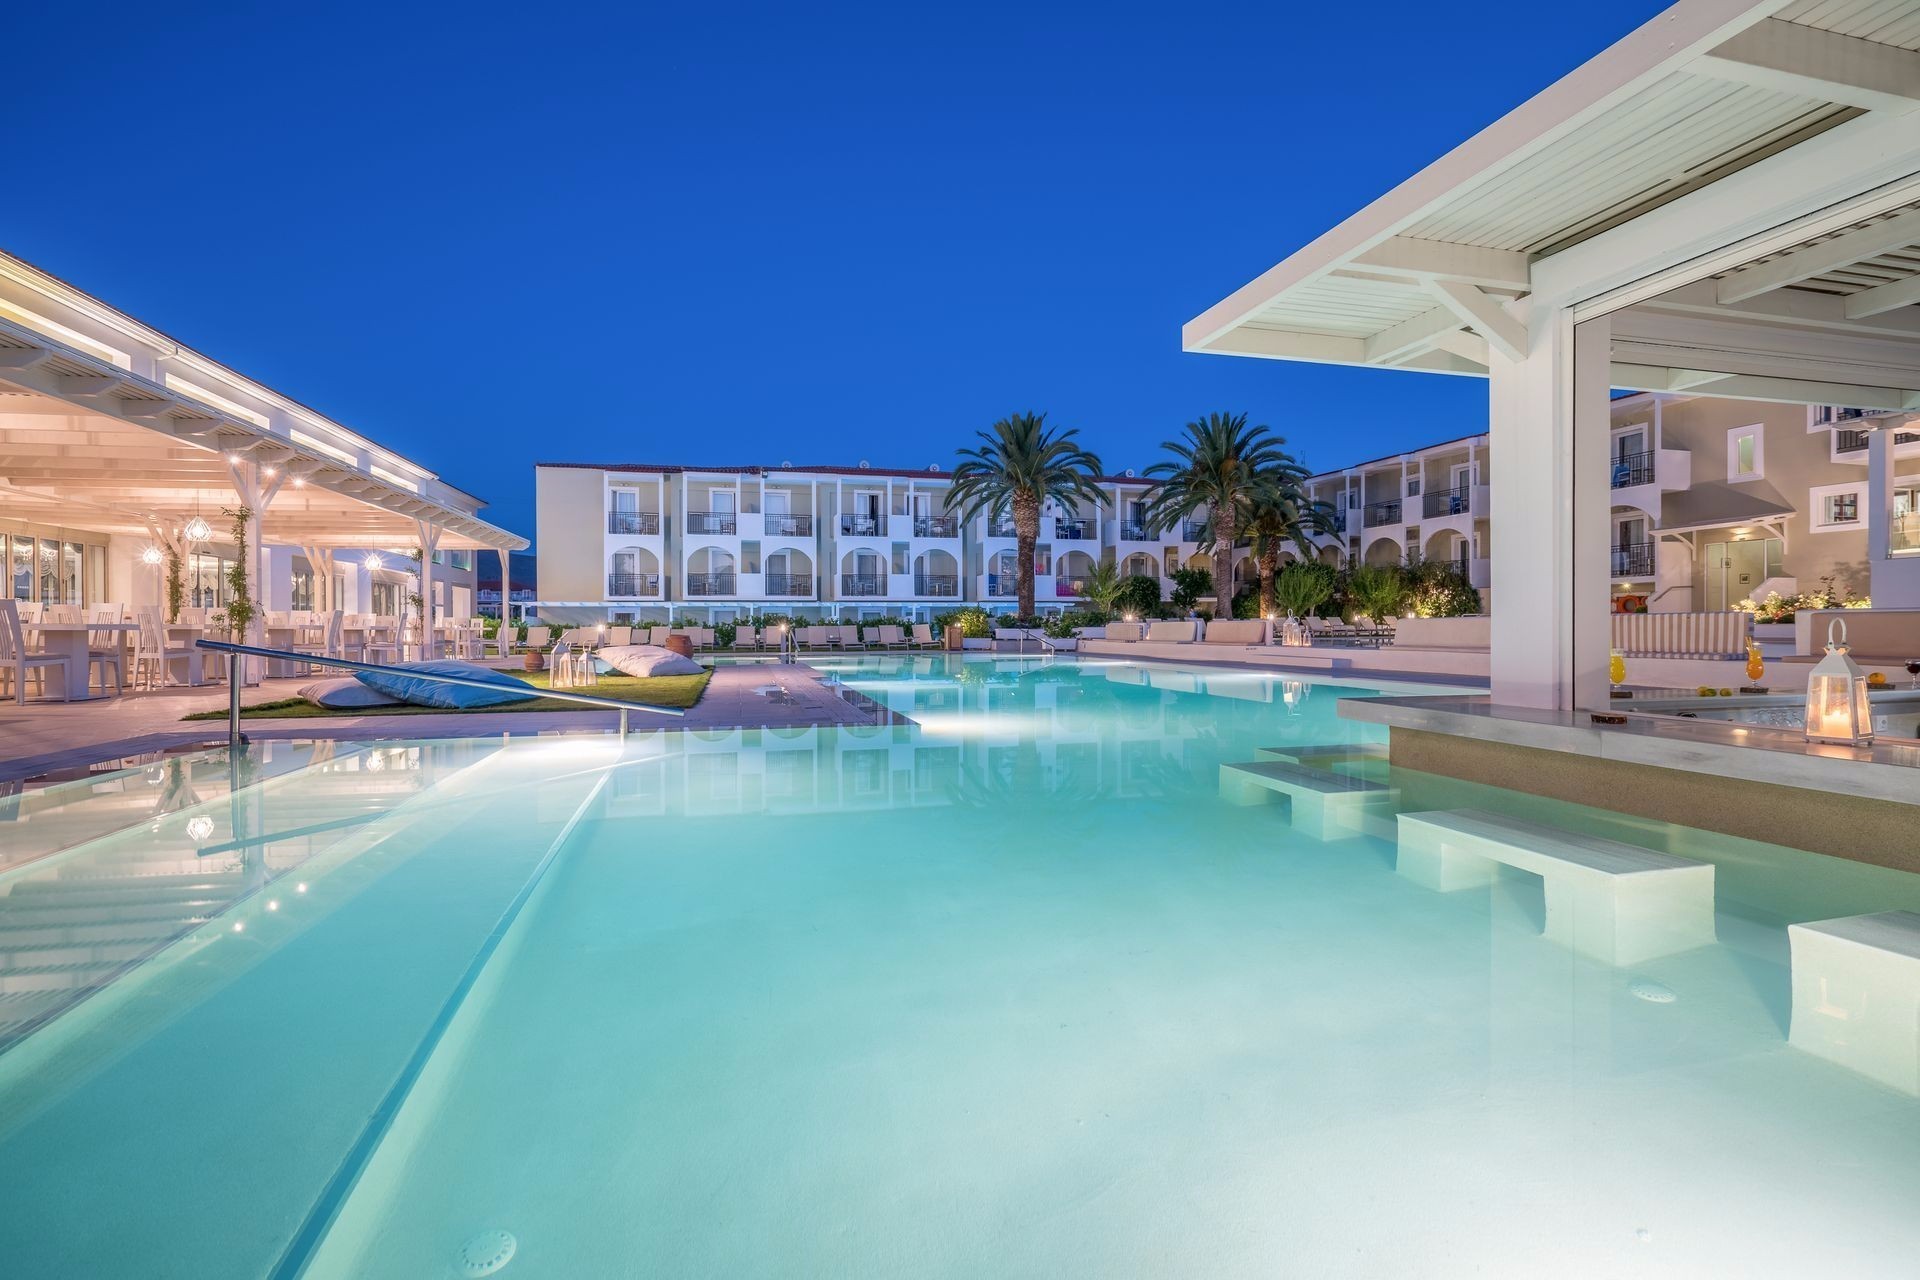 Zante Park Resort u0026 Spa | Luxury 5* hotel in Zakynthos